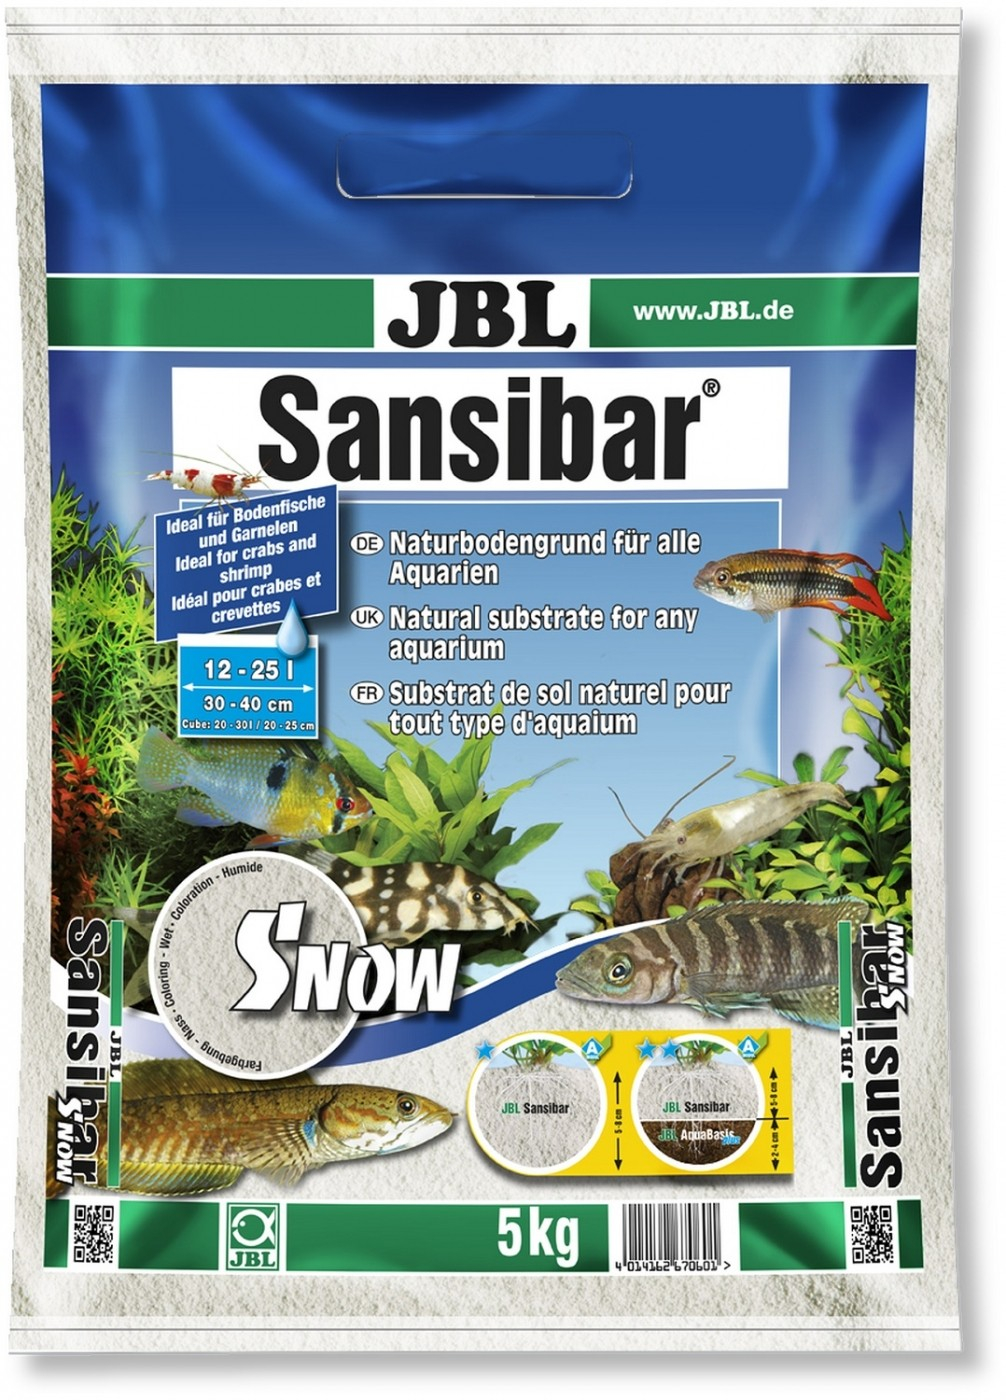 JBL Sansibar Snow sustrato arenoso